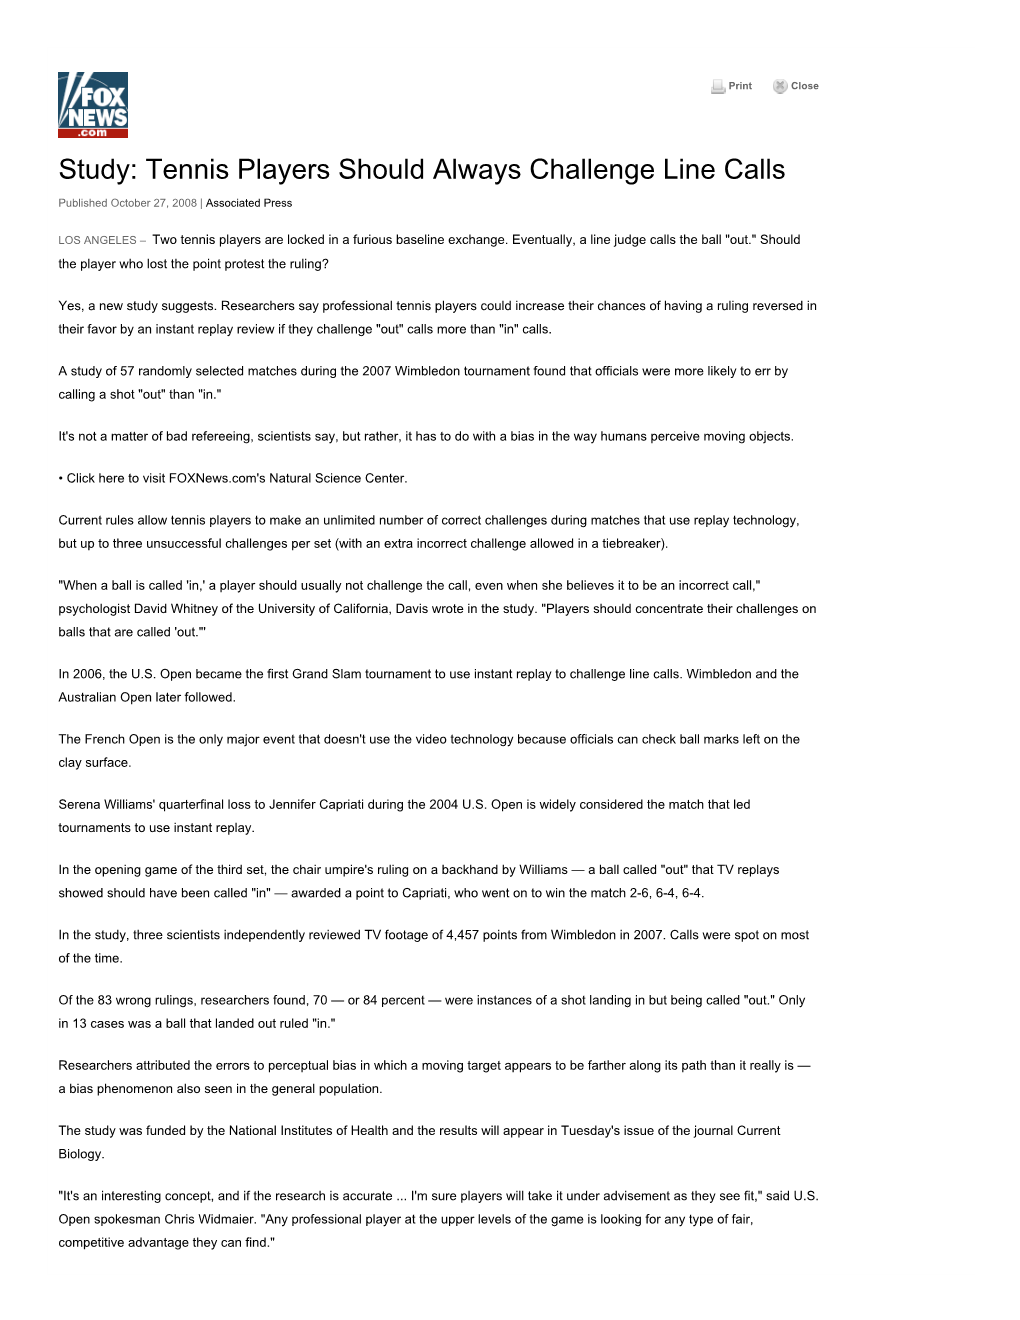 Study: Tennis Players Should Always Challenge Line Calls